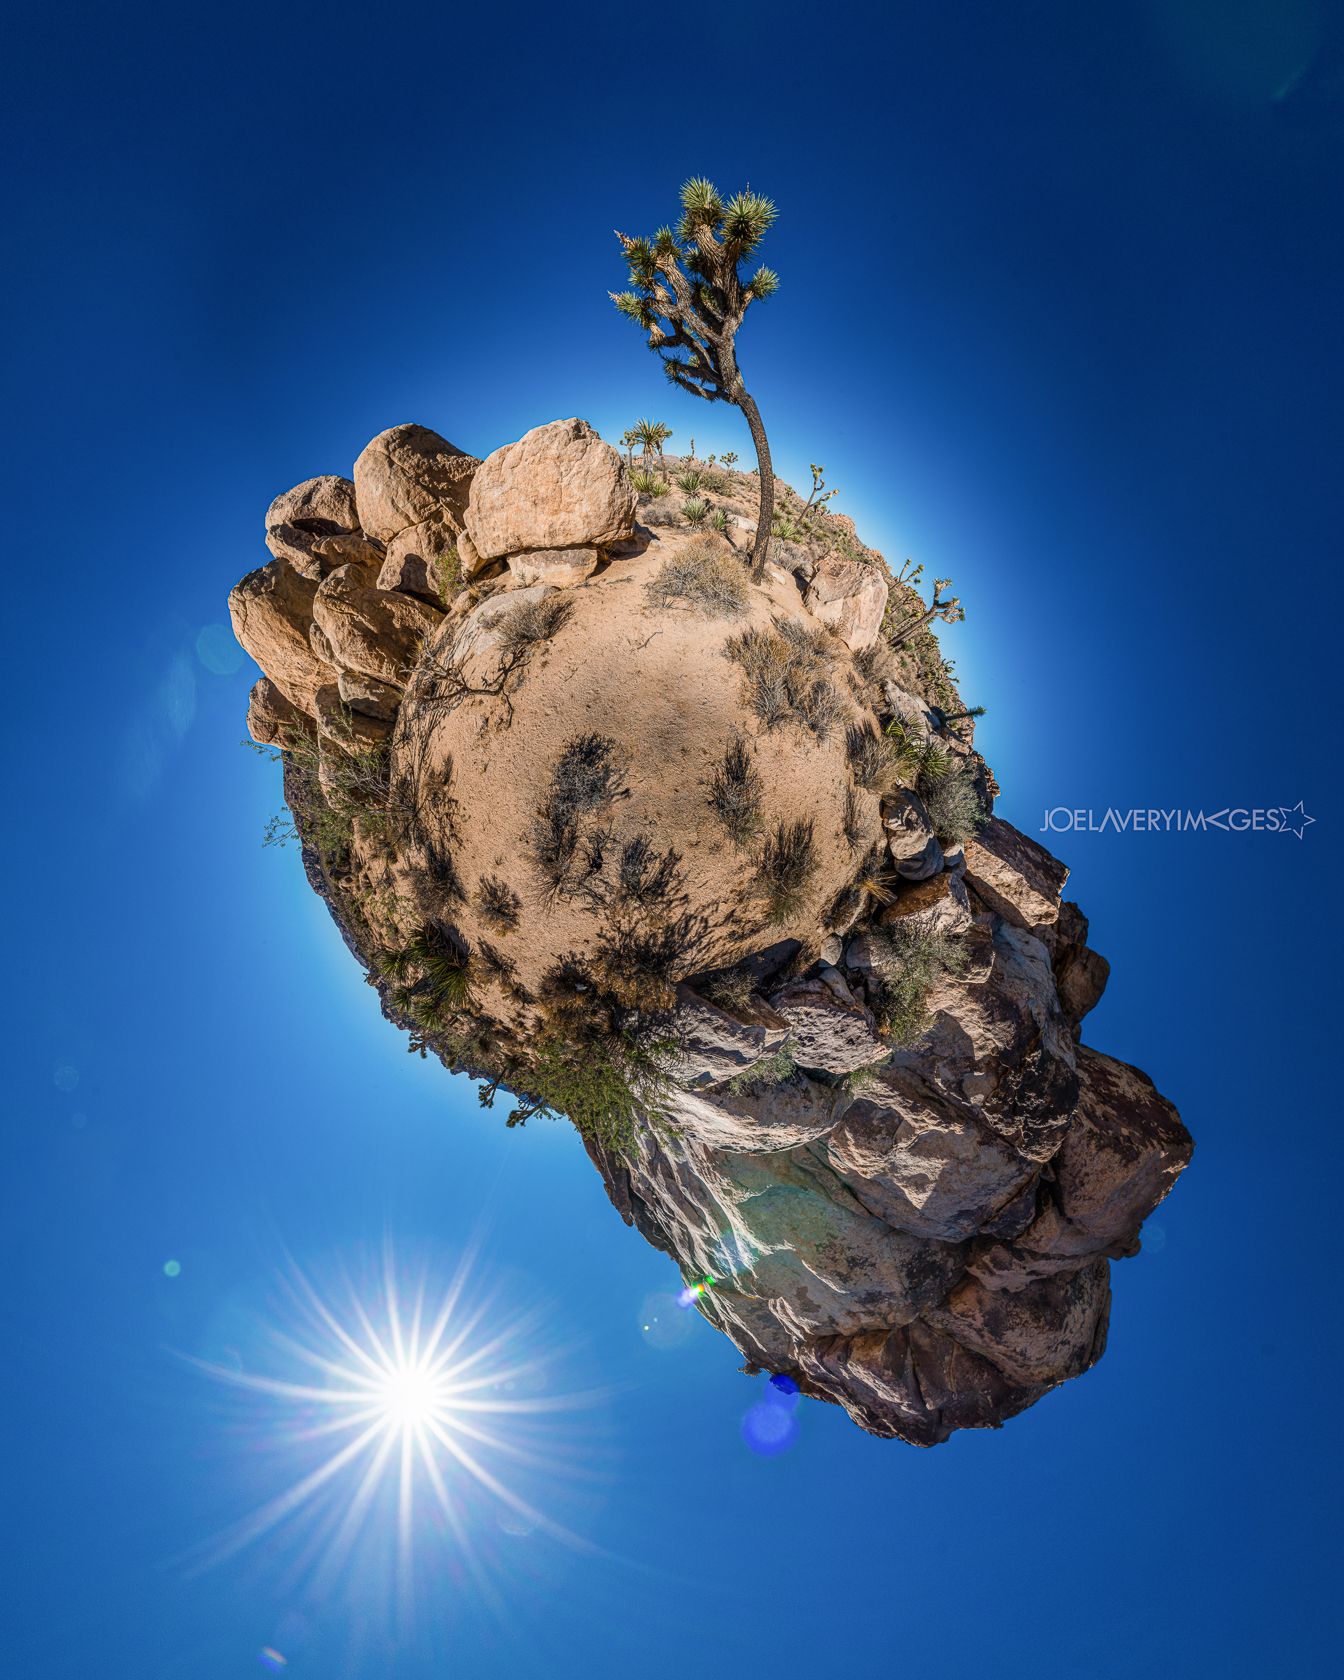 Joshua Tree 2016 - 360 degree "little planet" panorama